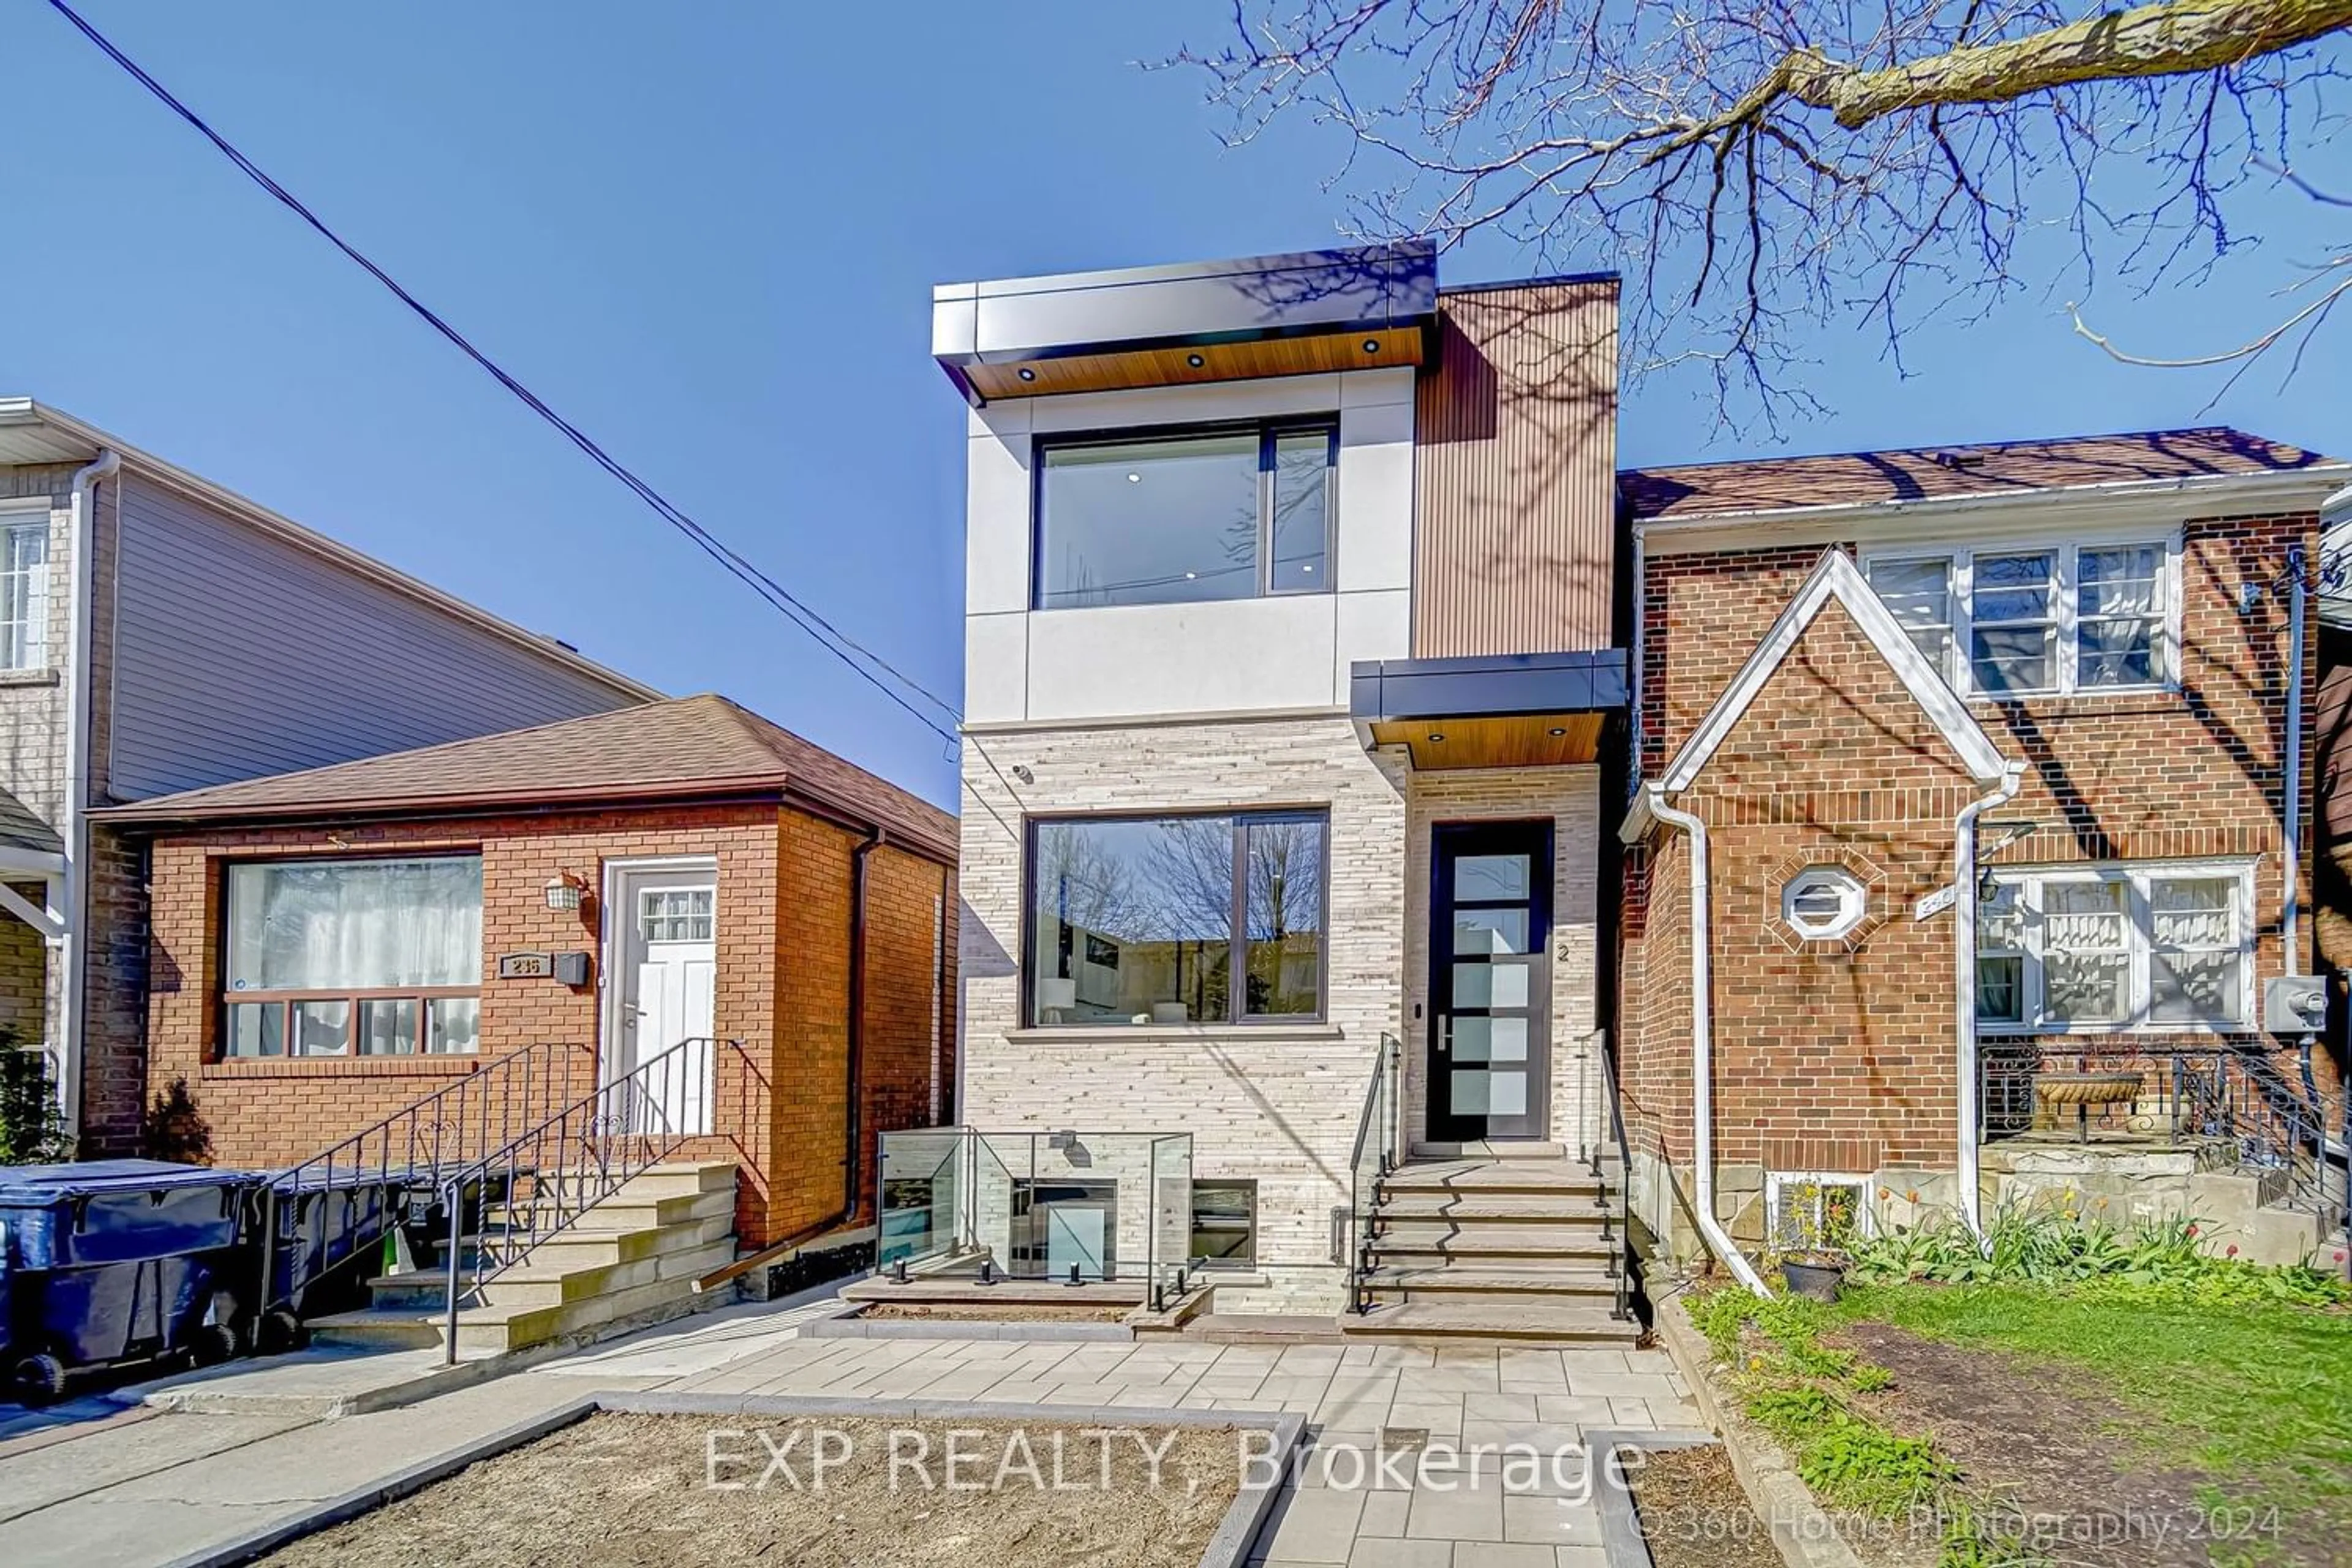 Home with brick exterior material for 238 Harvie Ave, Toronto Ontario M6E 4K6